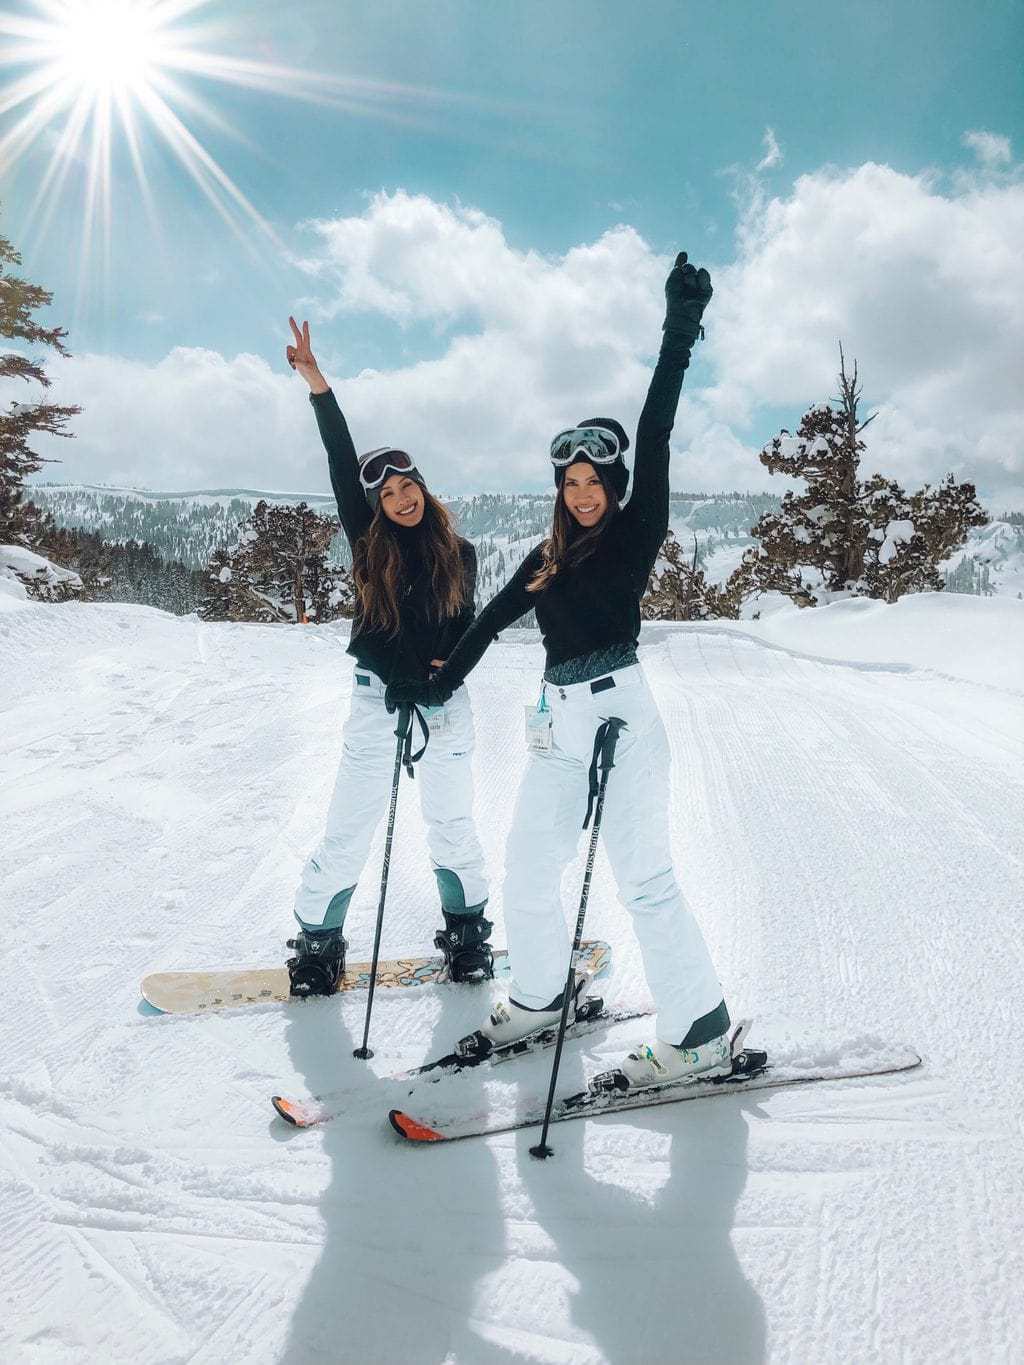 Best skiwear – what to wear skiing